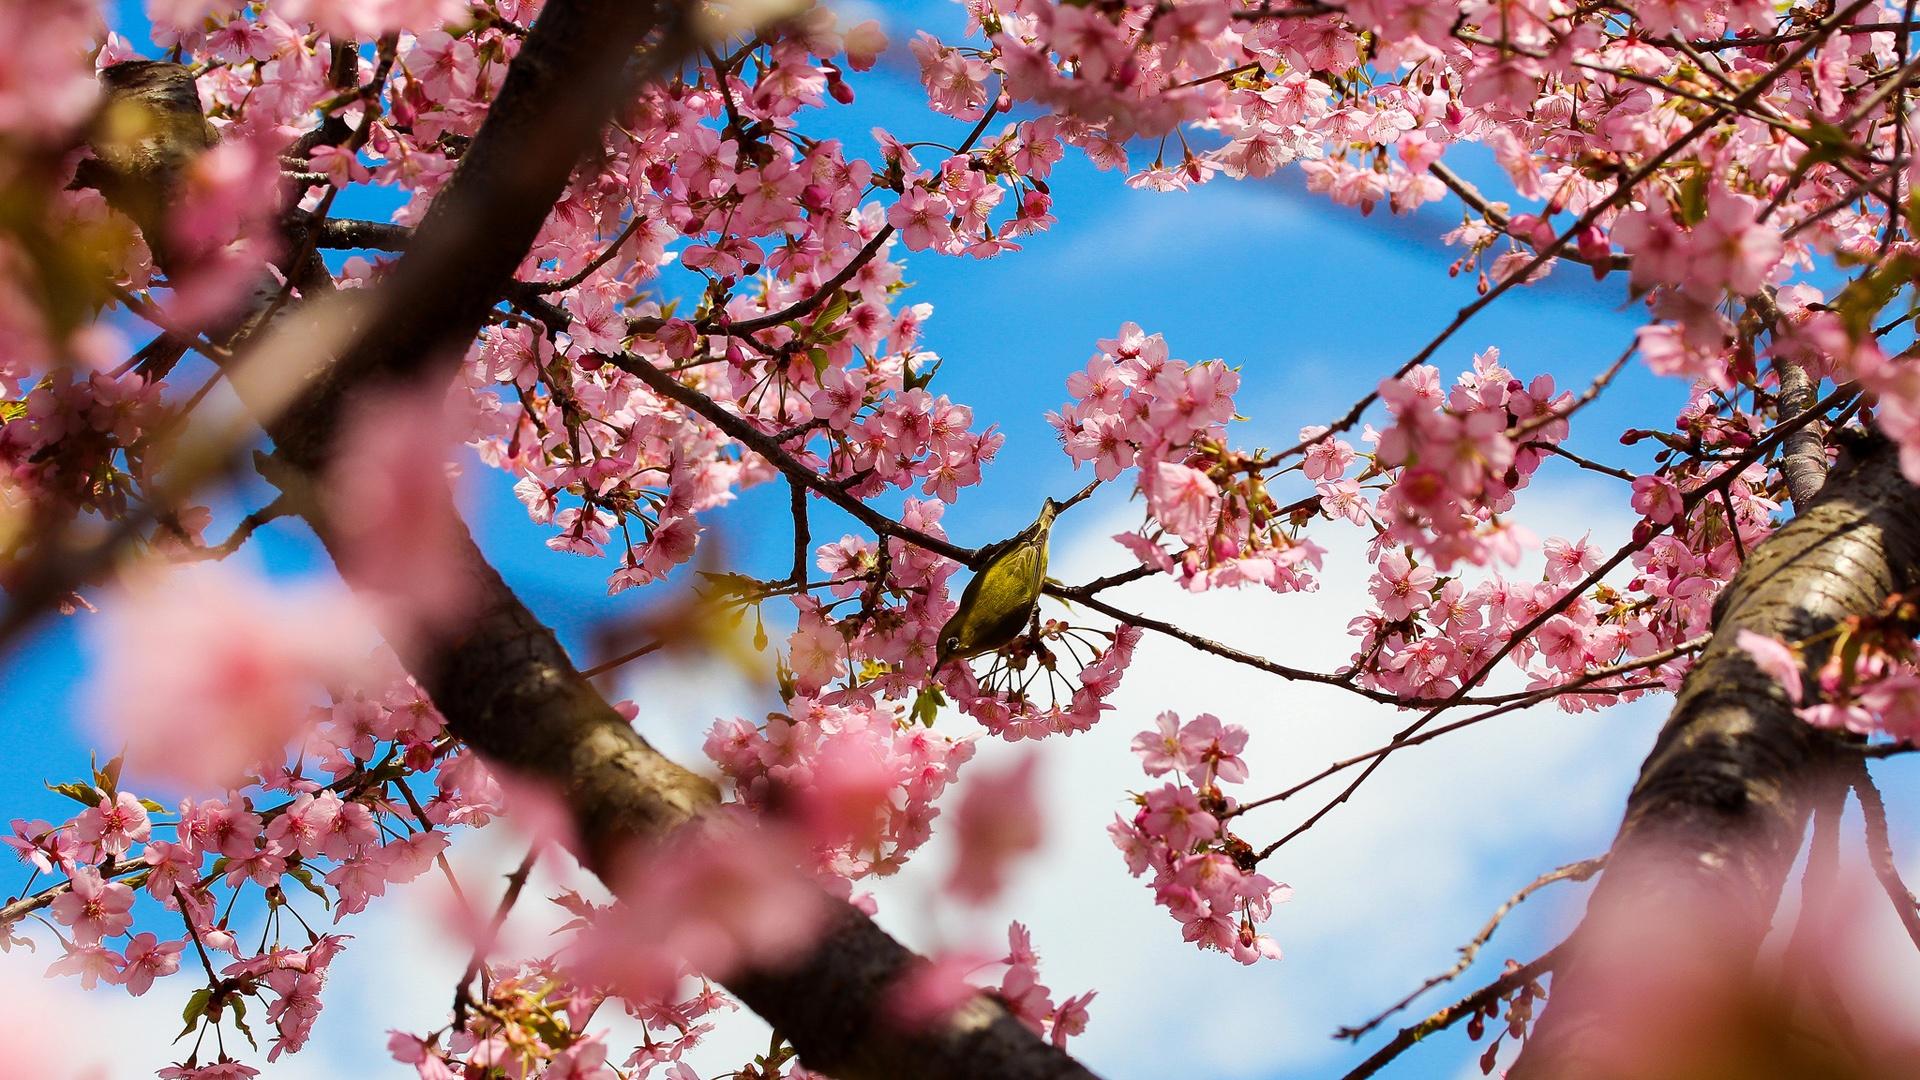 Wallpaper Tokyo Japan, park cherry trees, pink flowers, bird 1920x1080 Full HD 2K Picture, Image